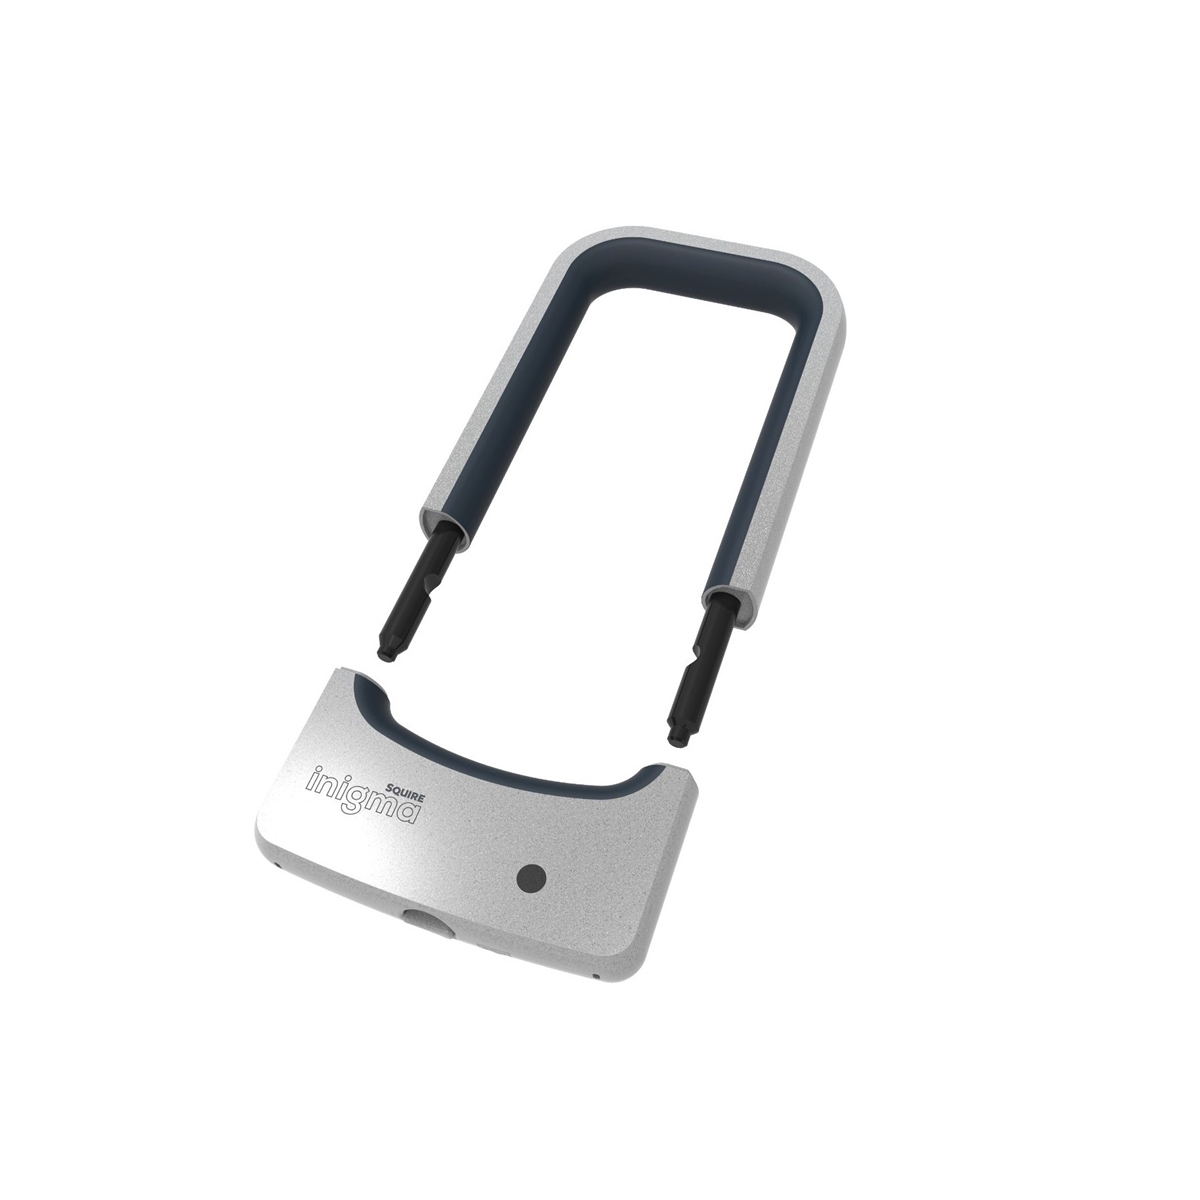 Bluetooth Bikelock Inigma BL1 190mm aberto/fechado com Smartphone